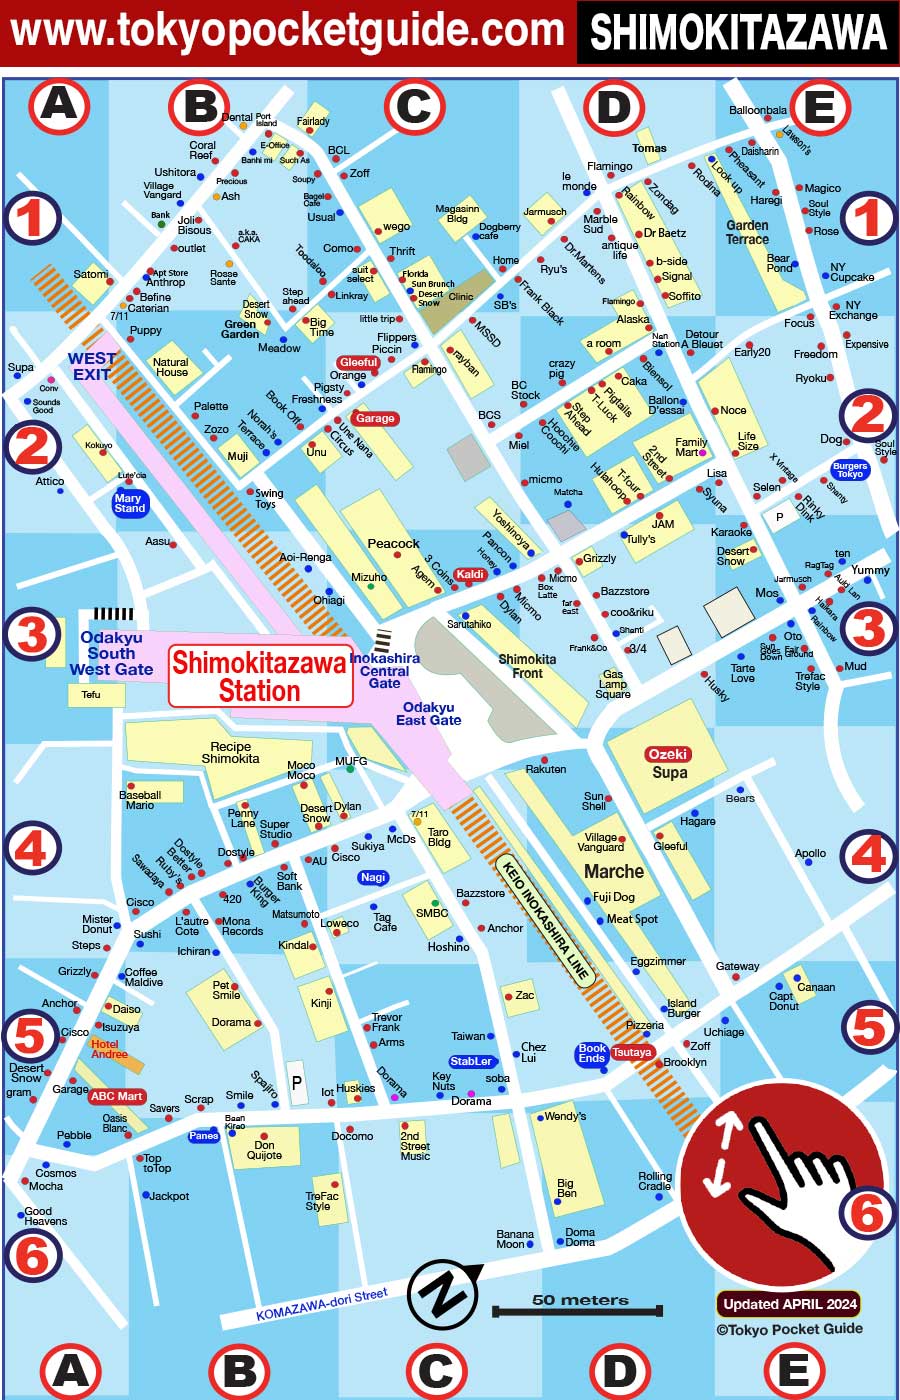 TOKYO POCKET GUIDE: Shimokitazawa map in English for shopping and Stores